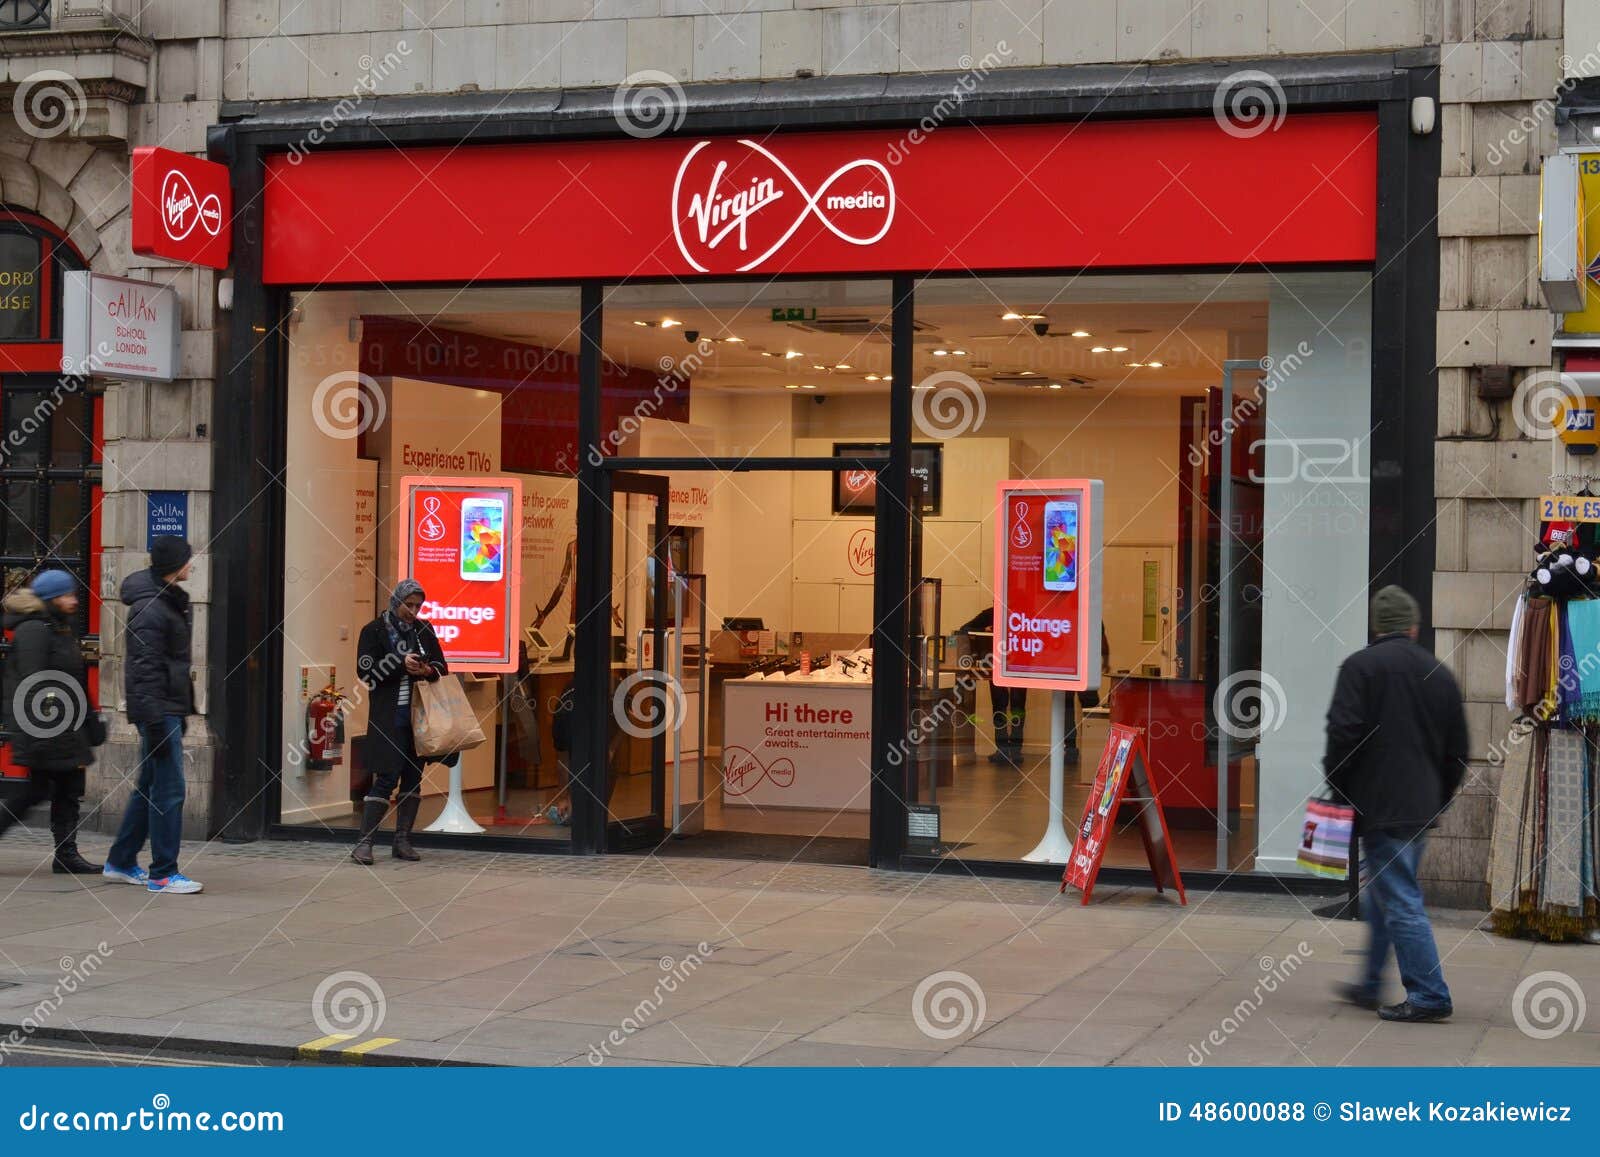 Virgin media store editorial stock photo. Image of shopping - 48600088